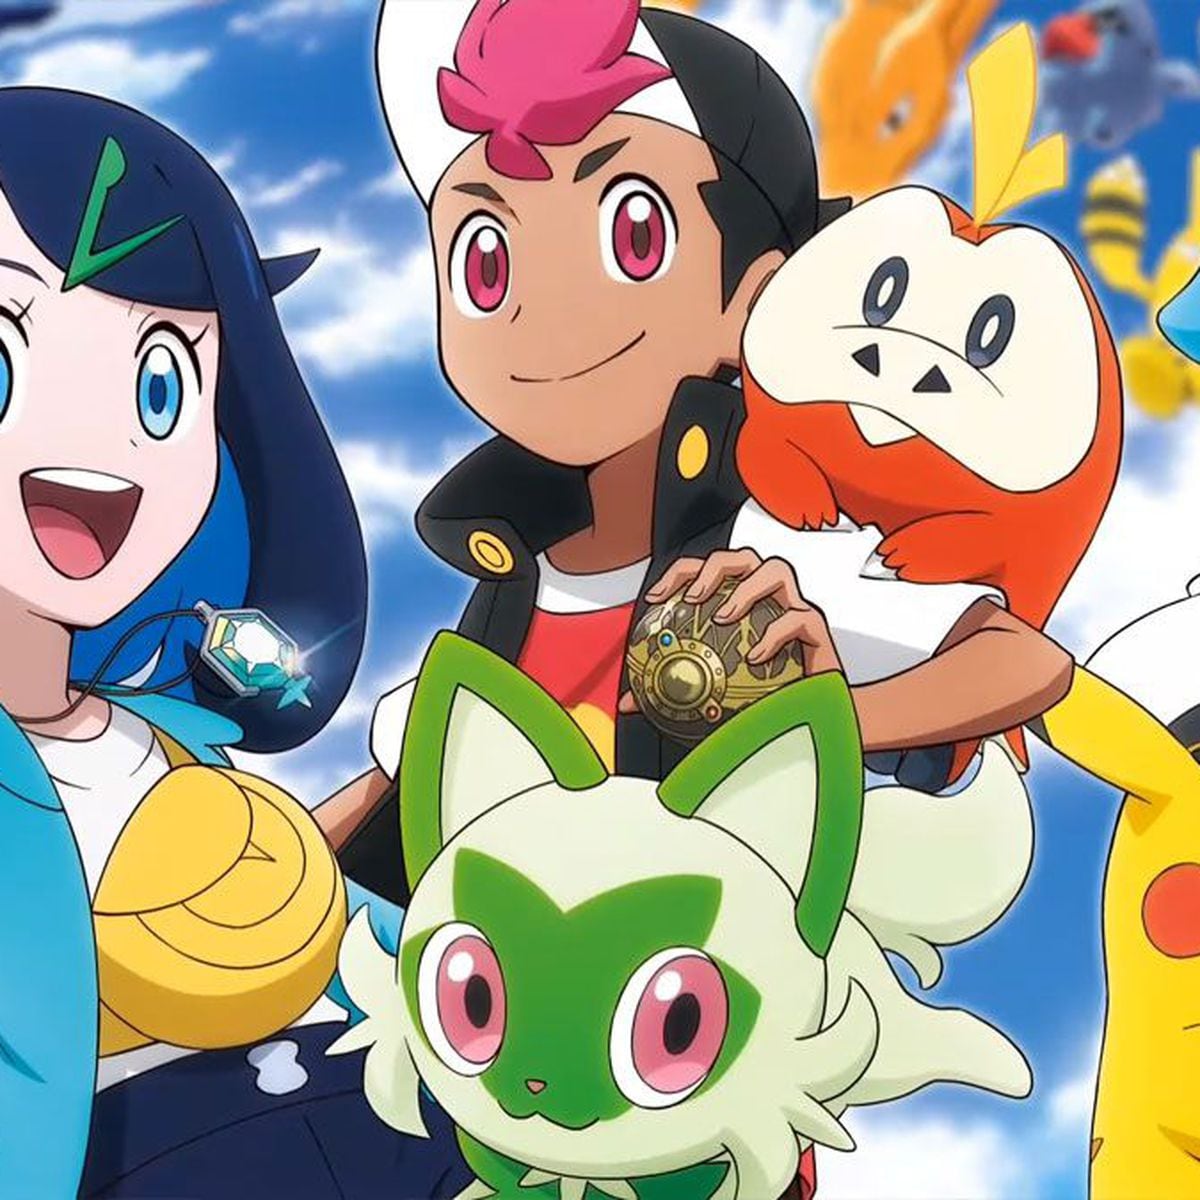 New Pokémon anime already has a premiere date in Japan - Meristation